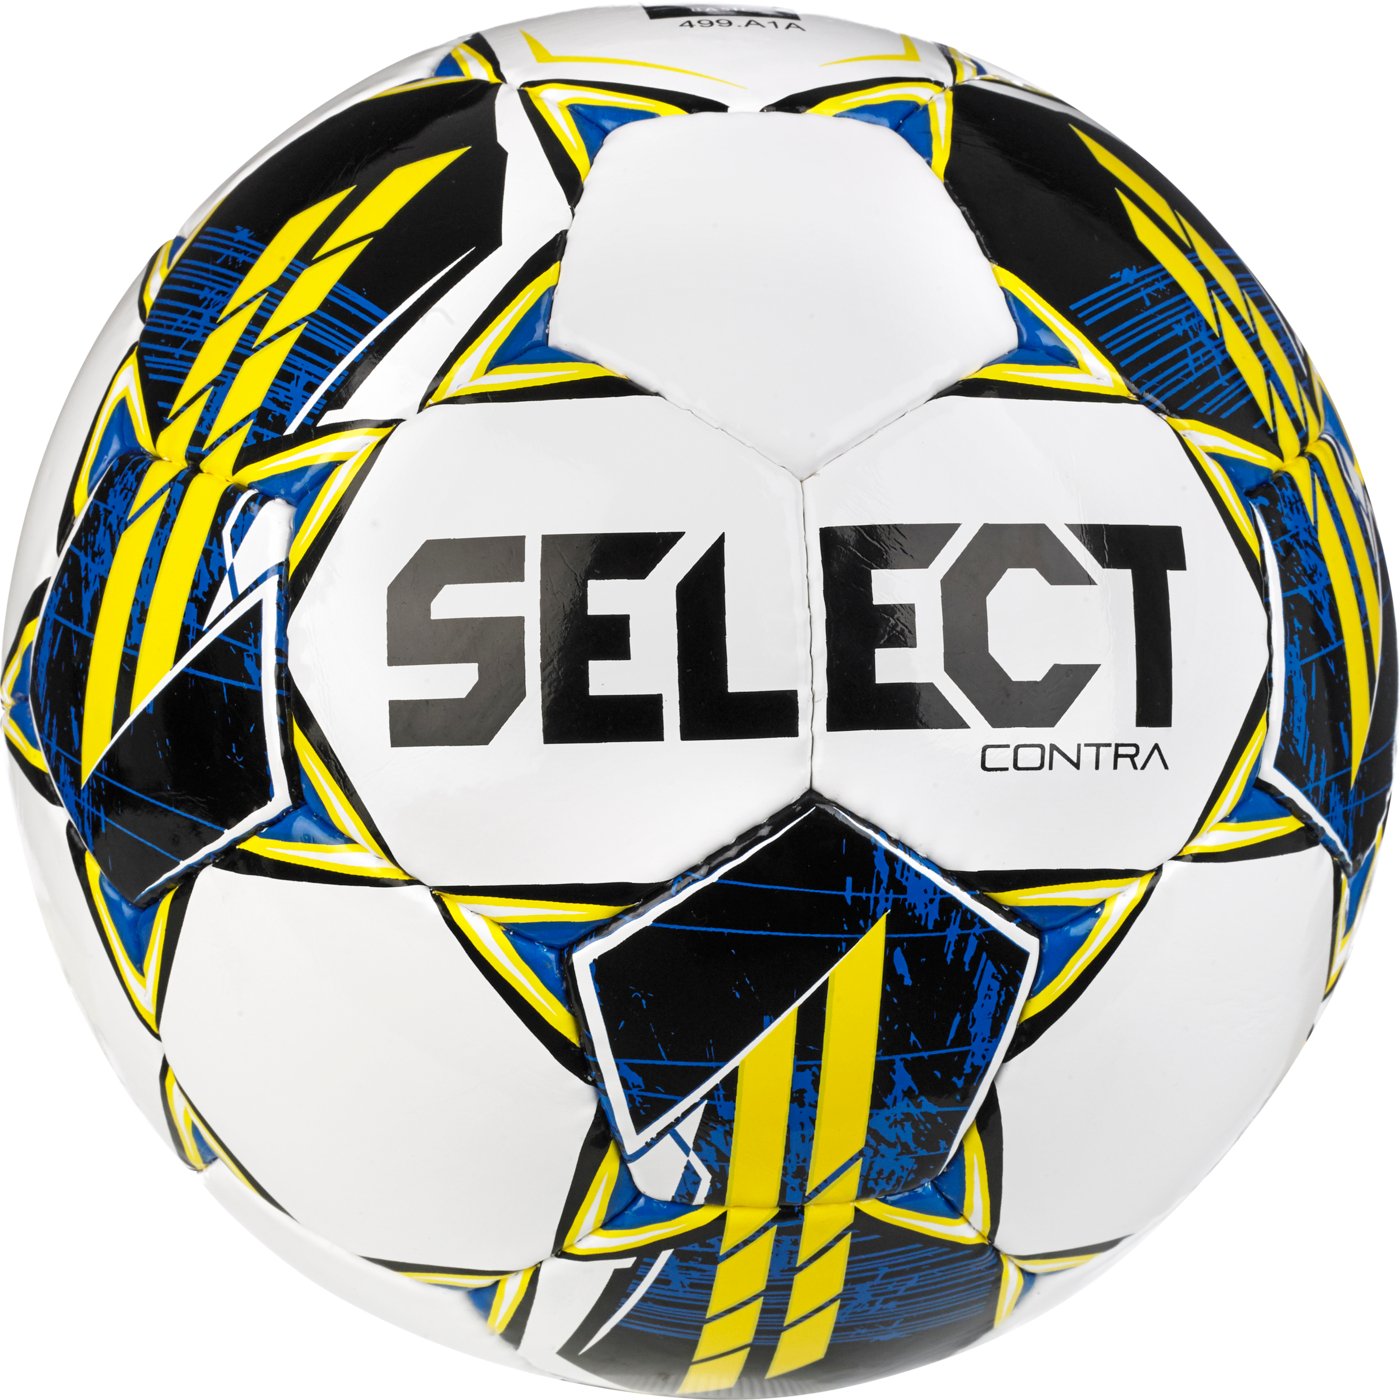 М'яч футбольний SELECT Contra FIFA Basic v23 (196) білий/жовтий, 5, 5